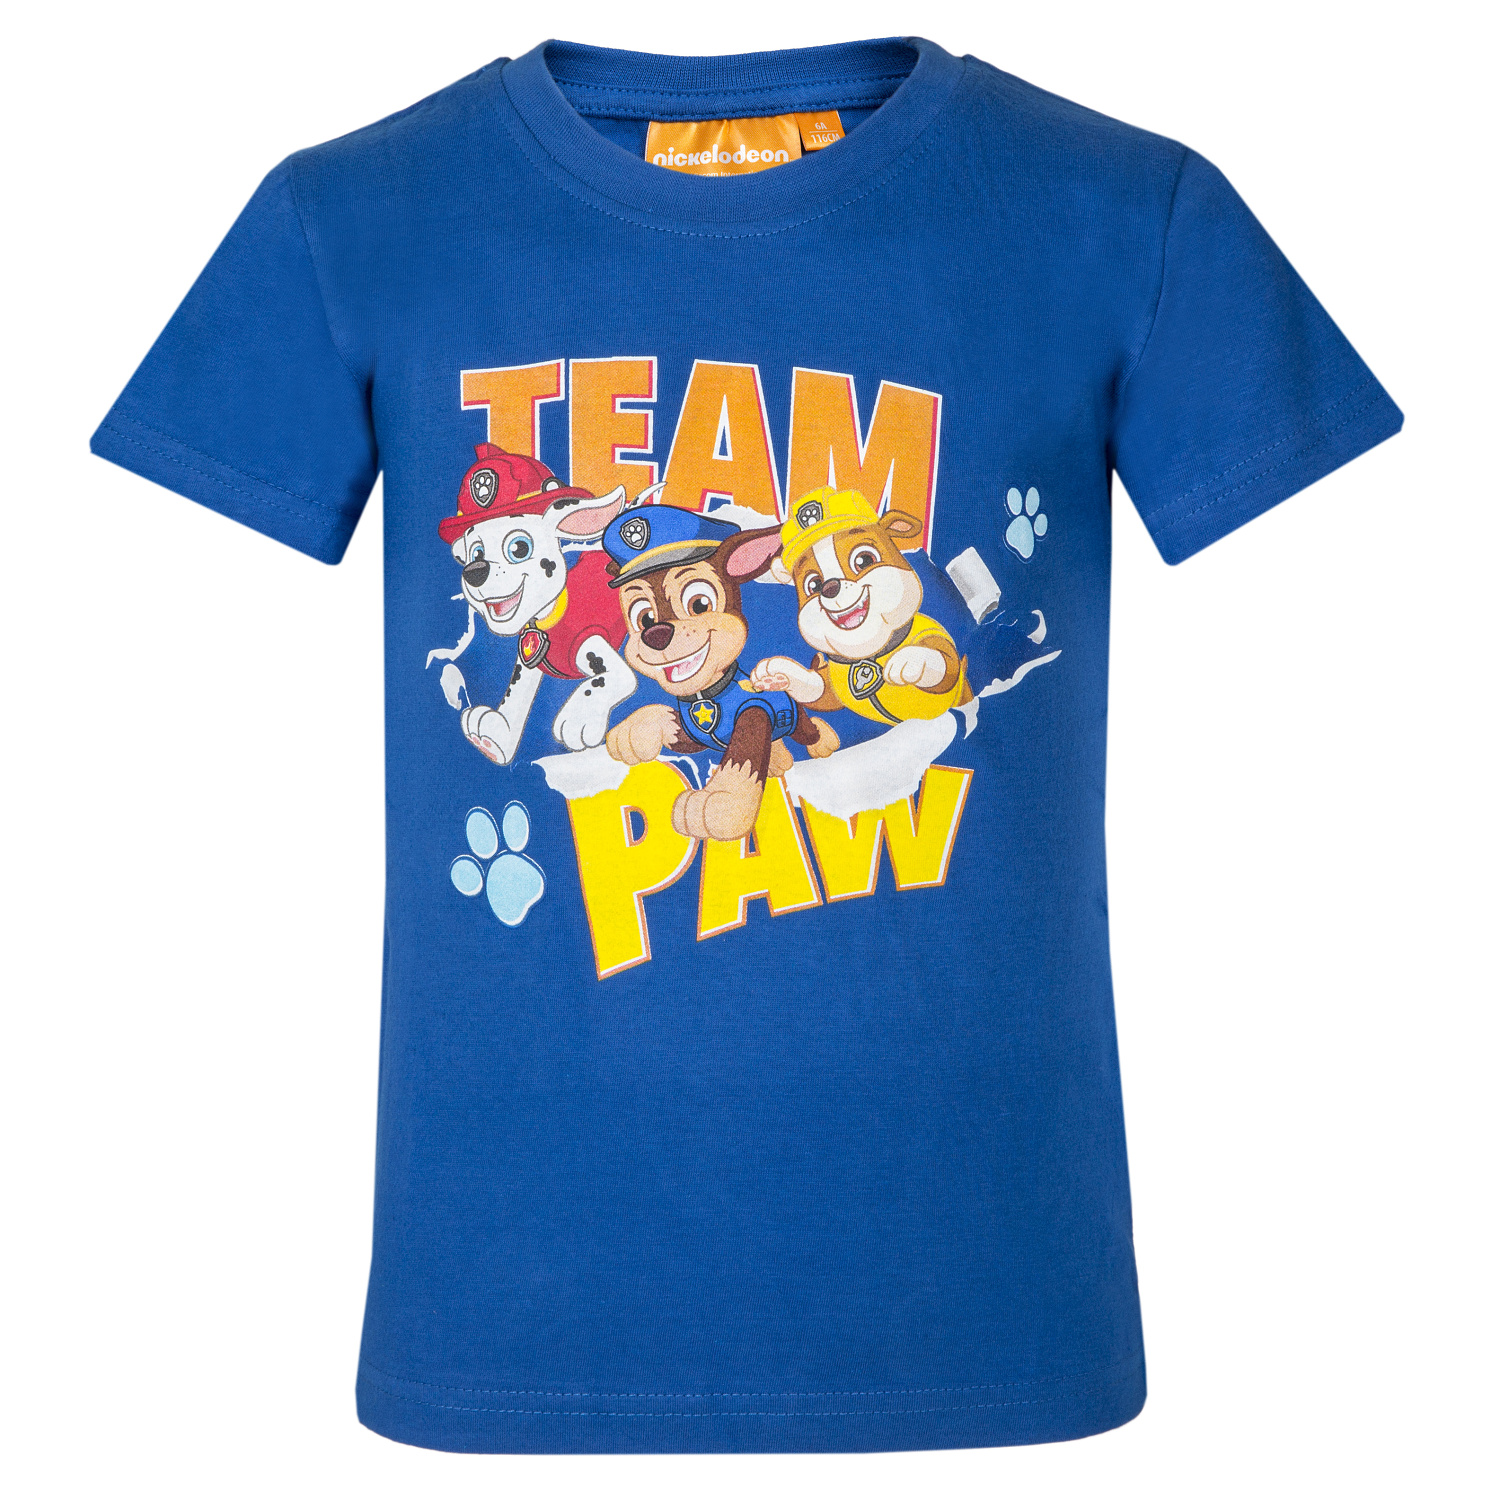 Levně Paw Patrol - Tlapková patrola -Licence Chlapecké triko - Paw Patrol 962-643, modrá Barva: Modrá